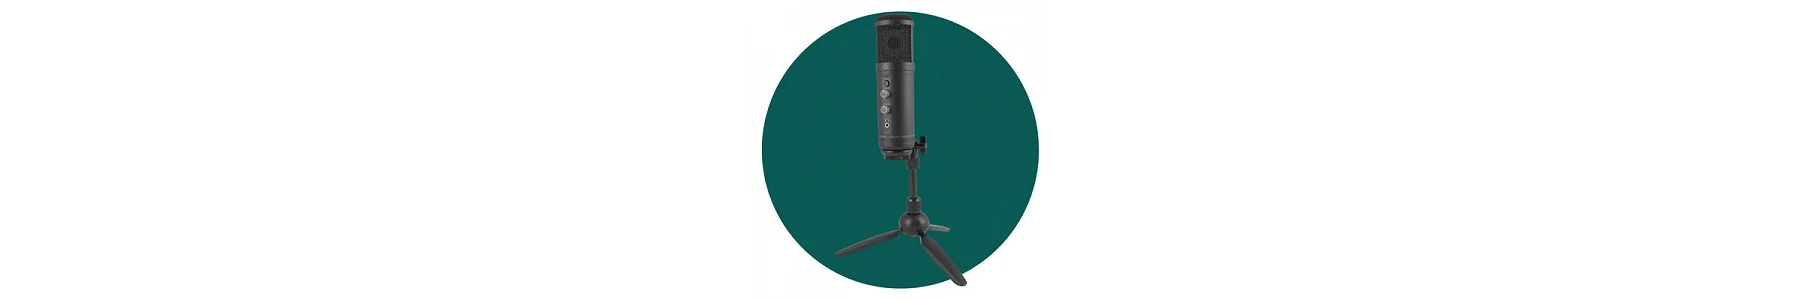 Microfones Black Friday | Cutoff Pro Audio Portugal